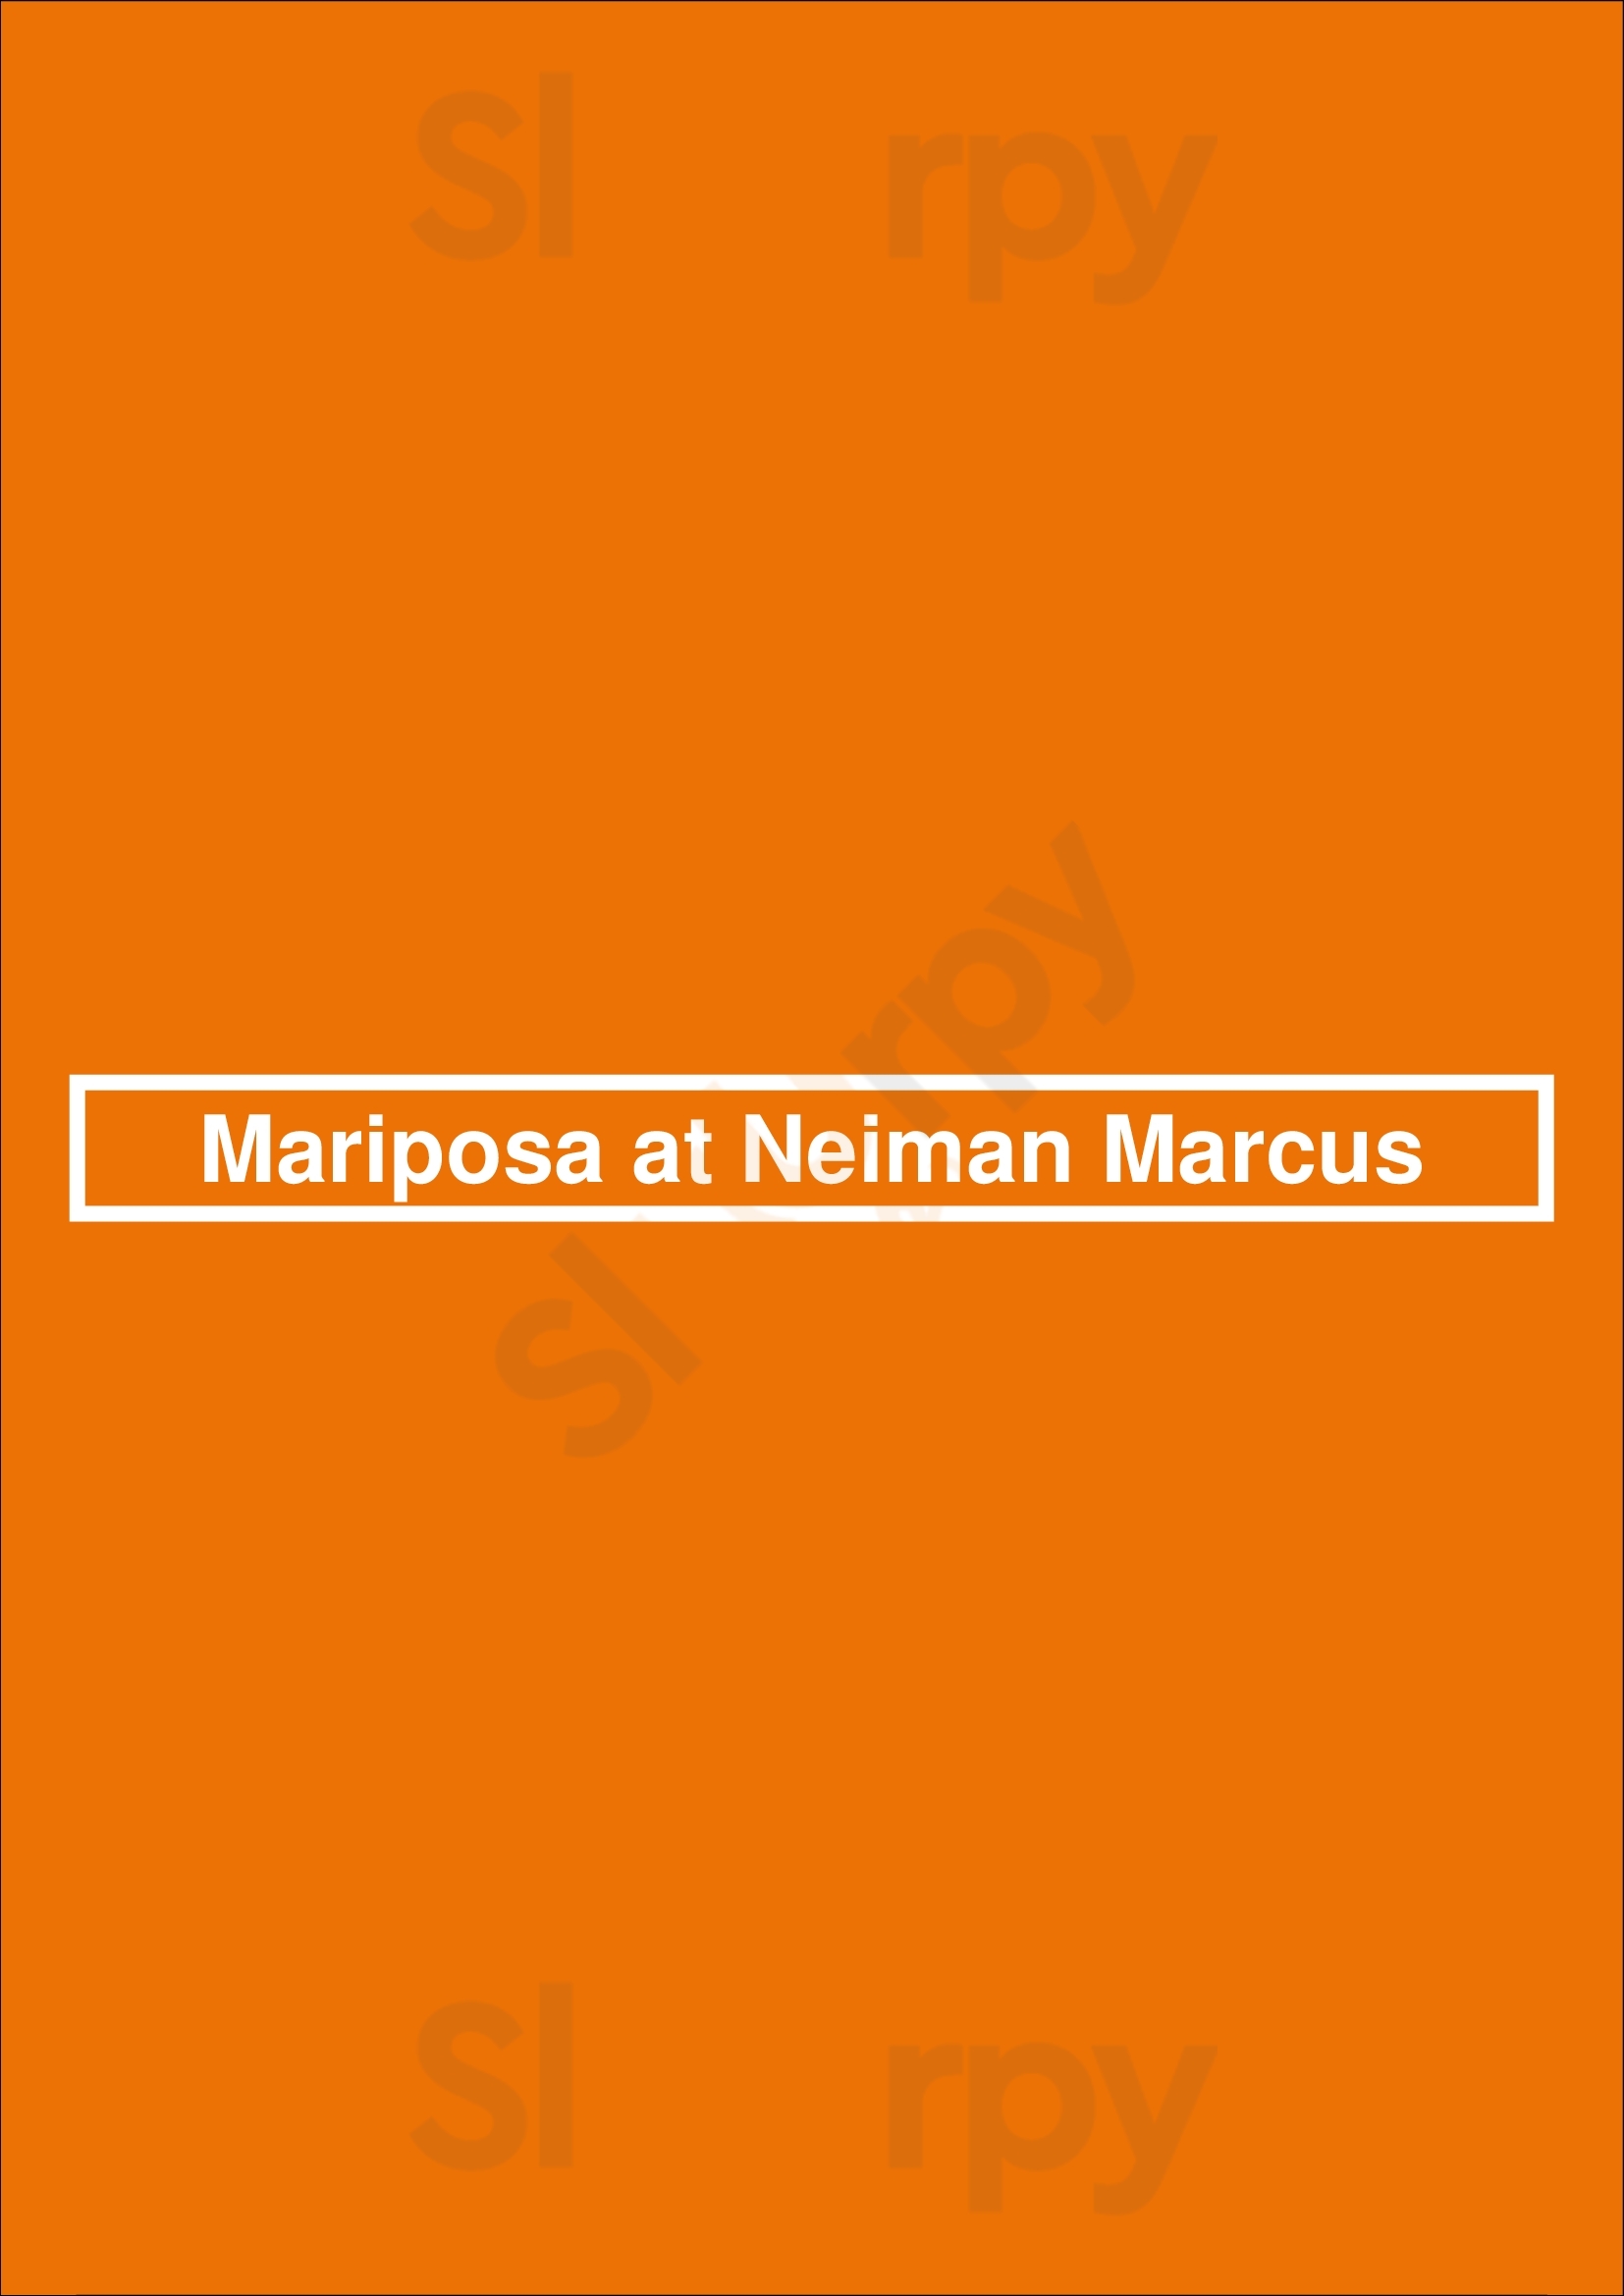 Mariposa At Neiman Marcus Houston Menu - 1